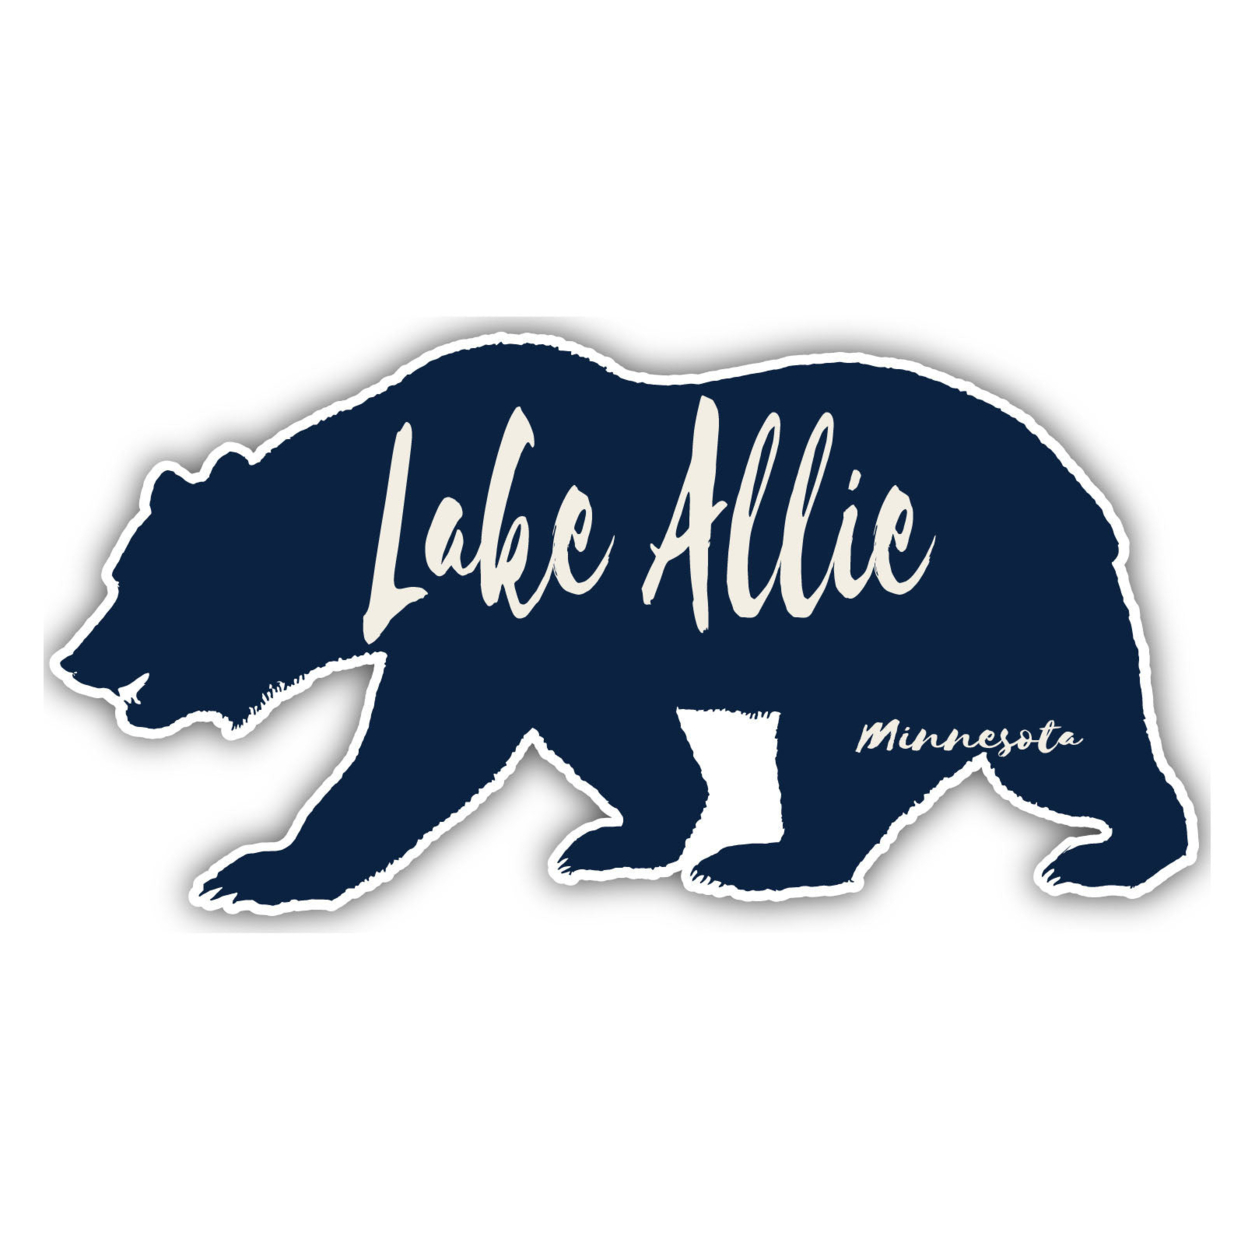 Lake Tahoe California Souvenir Decorative Stickers (Choose Theme And Size) - 4-Inch, Bear